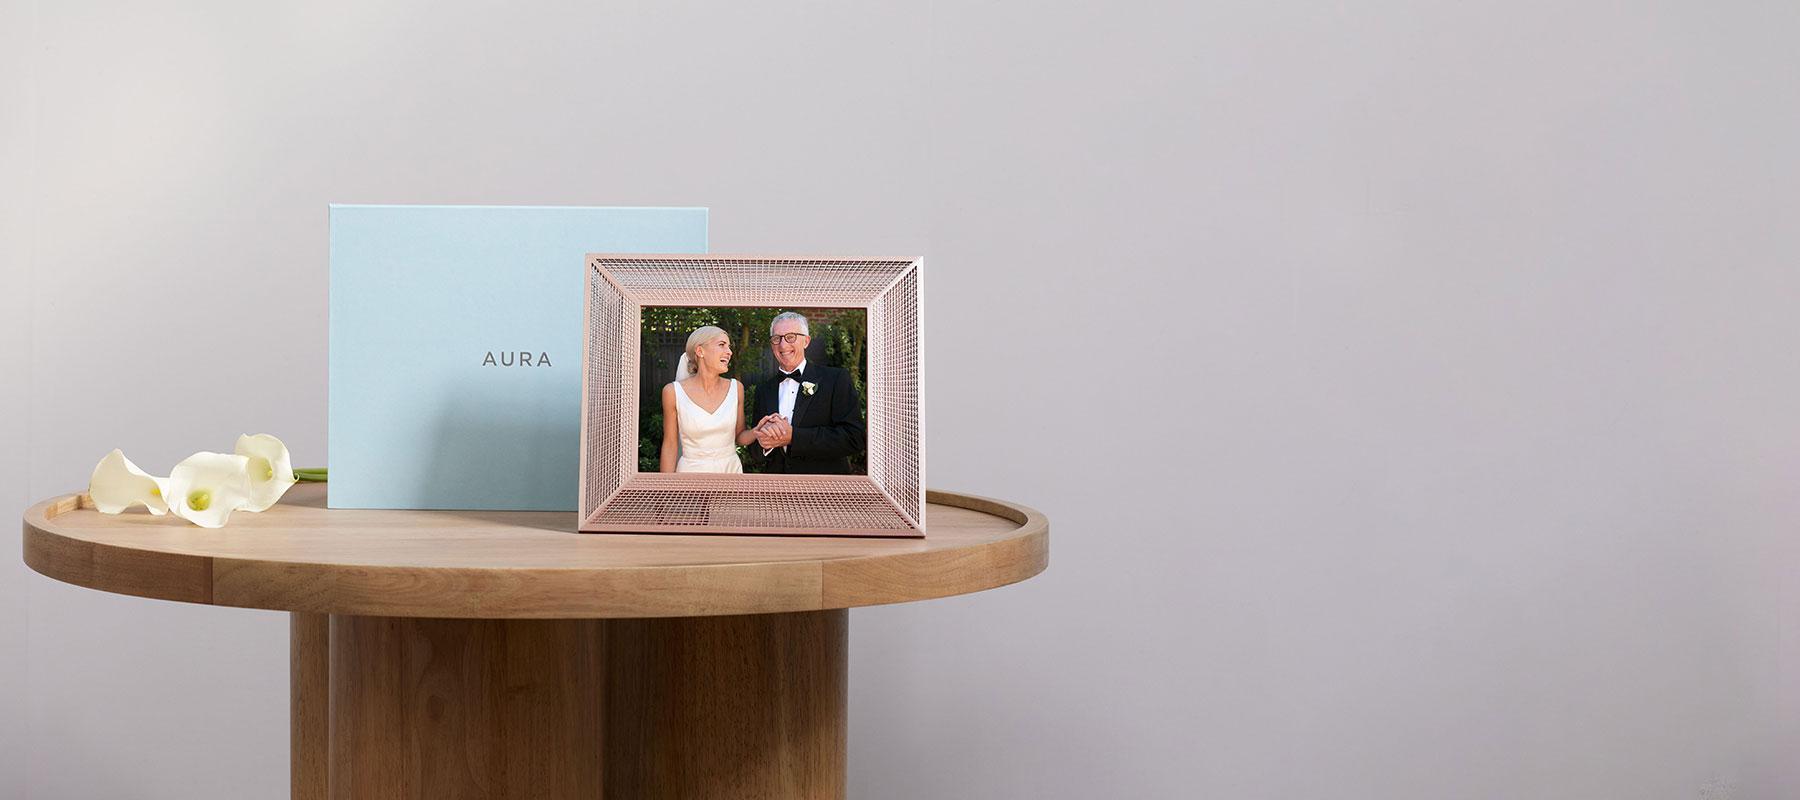 Aura Arama frame sitting on a side table showing a wedding couple